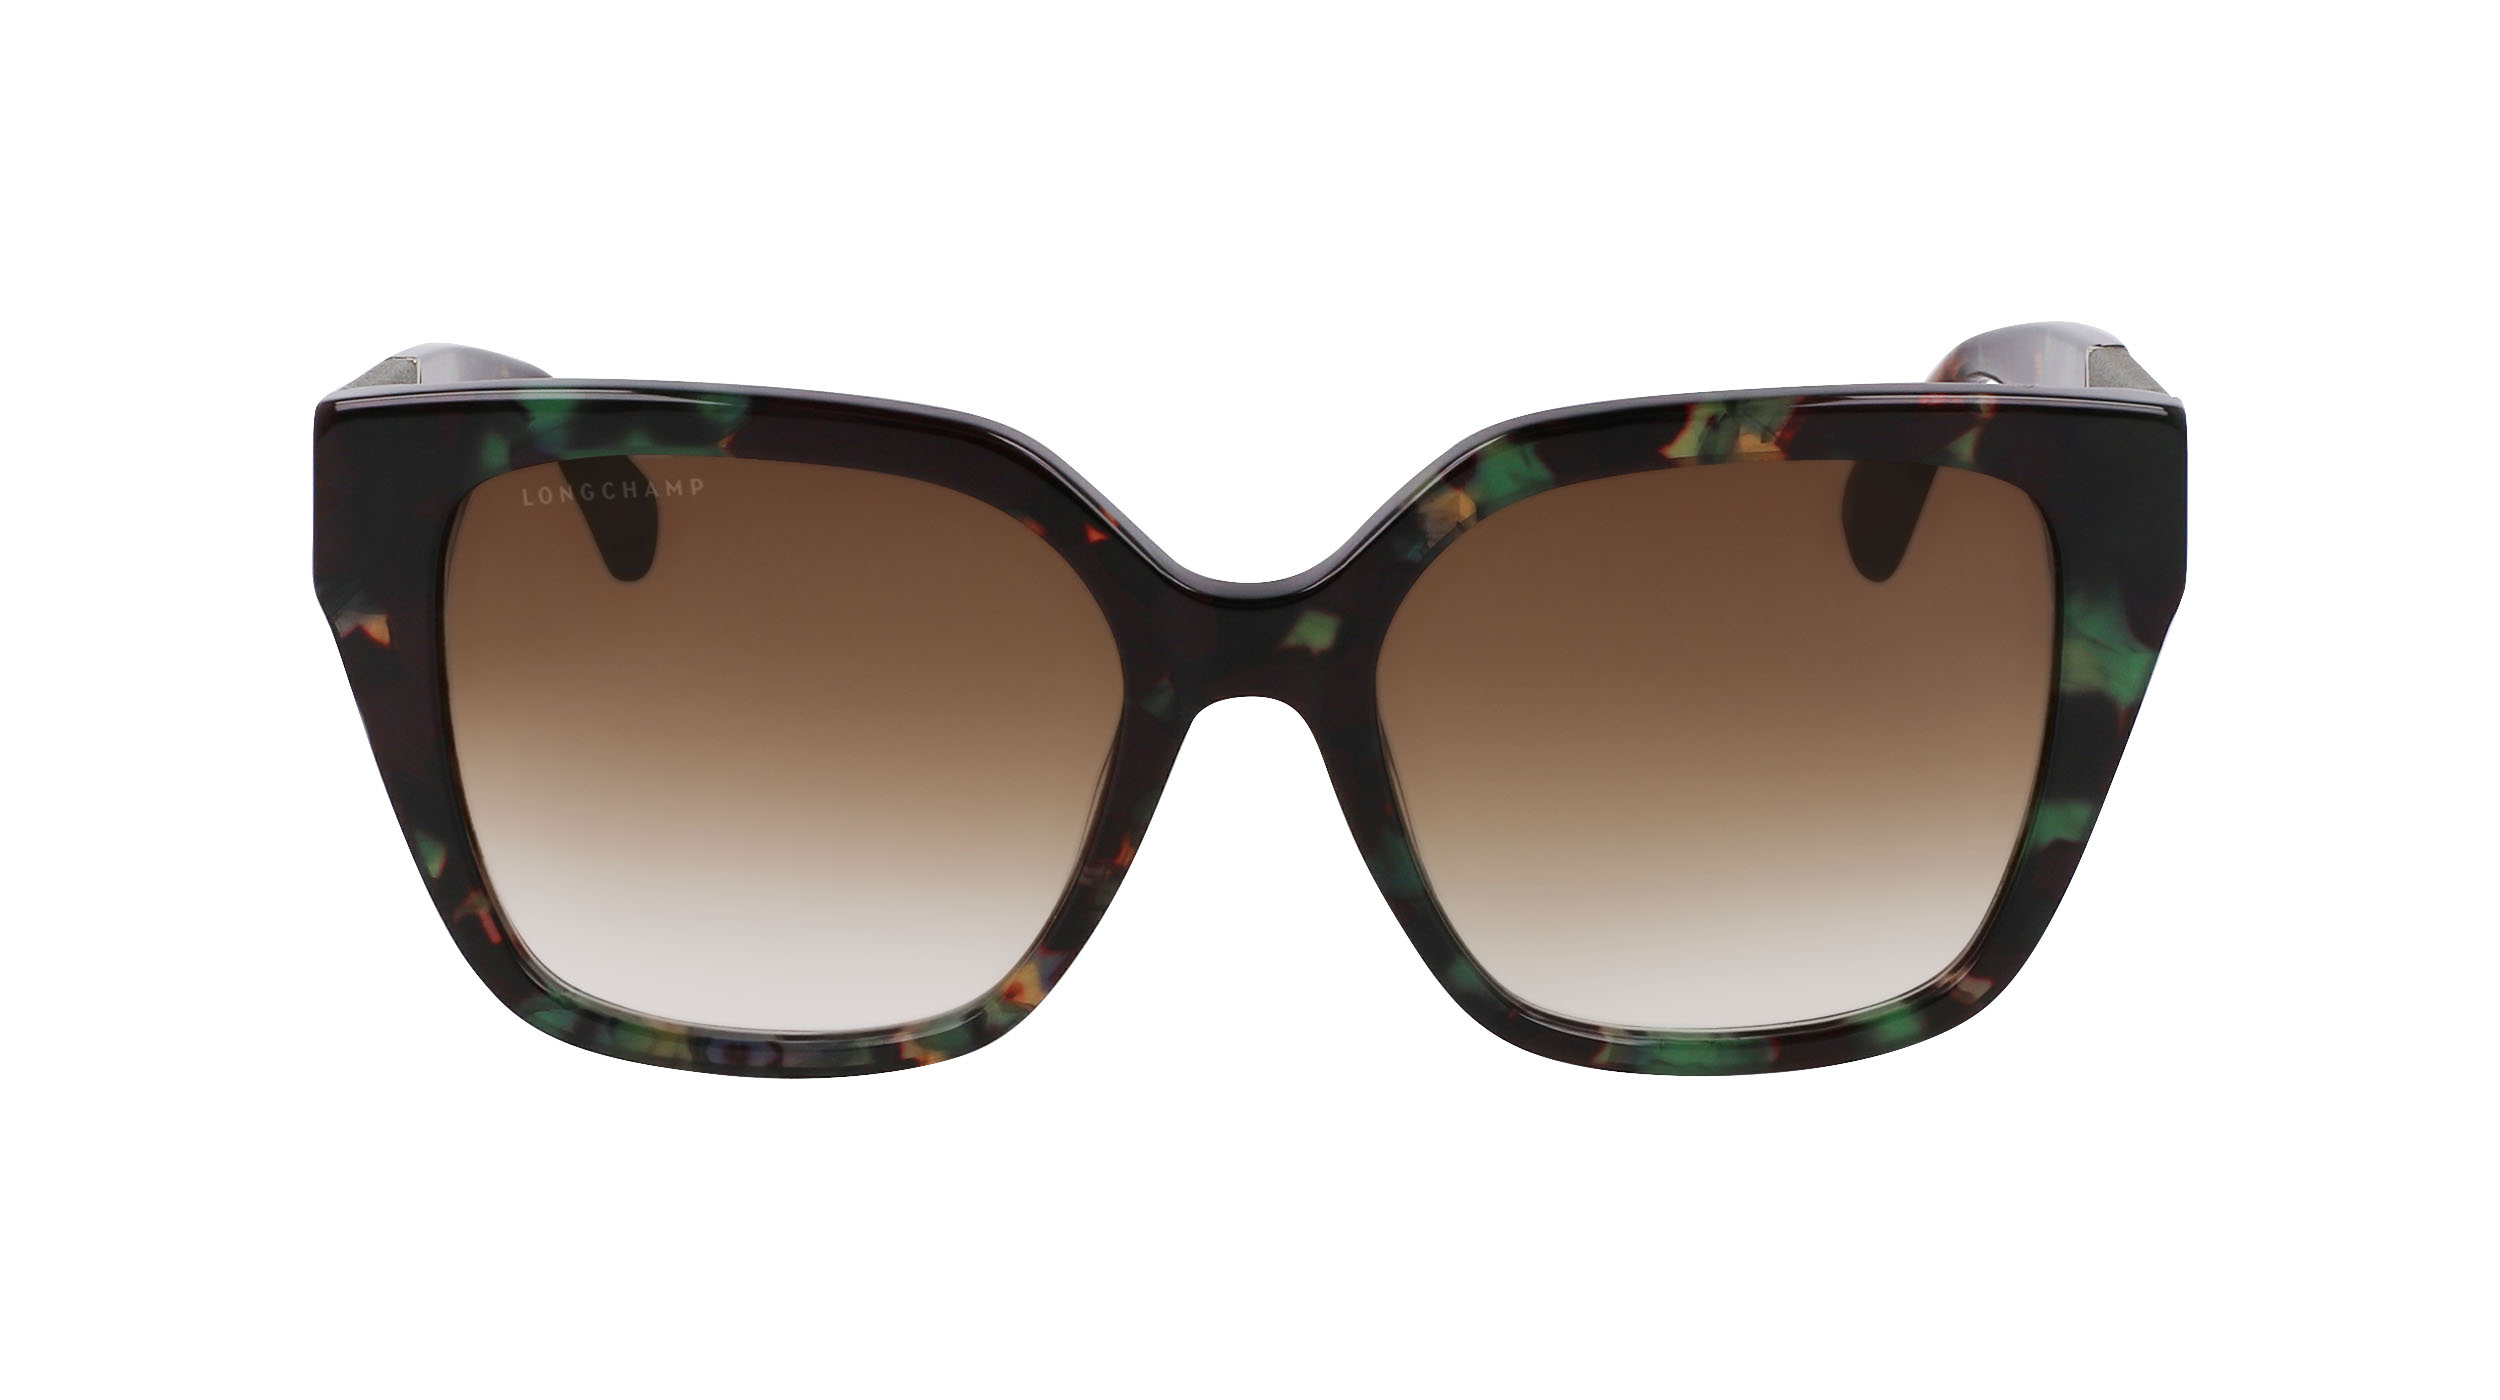 Sunglasses Longchamp Lo754sl, green colour - Doyle